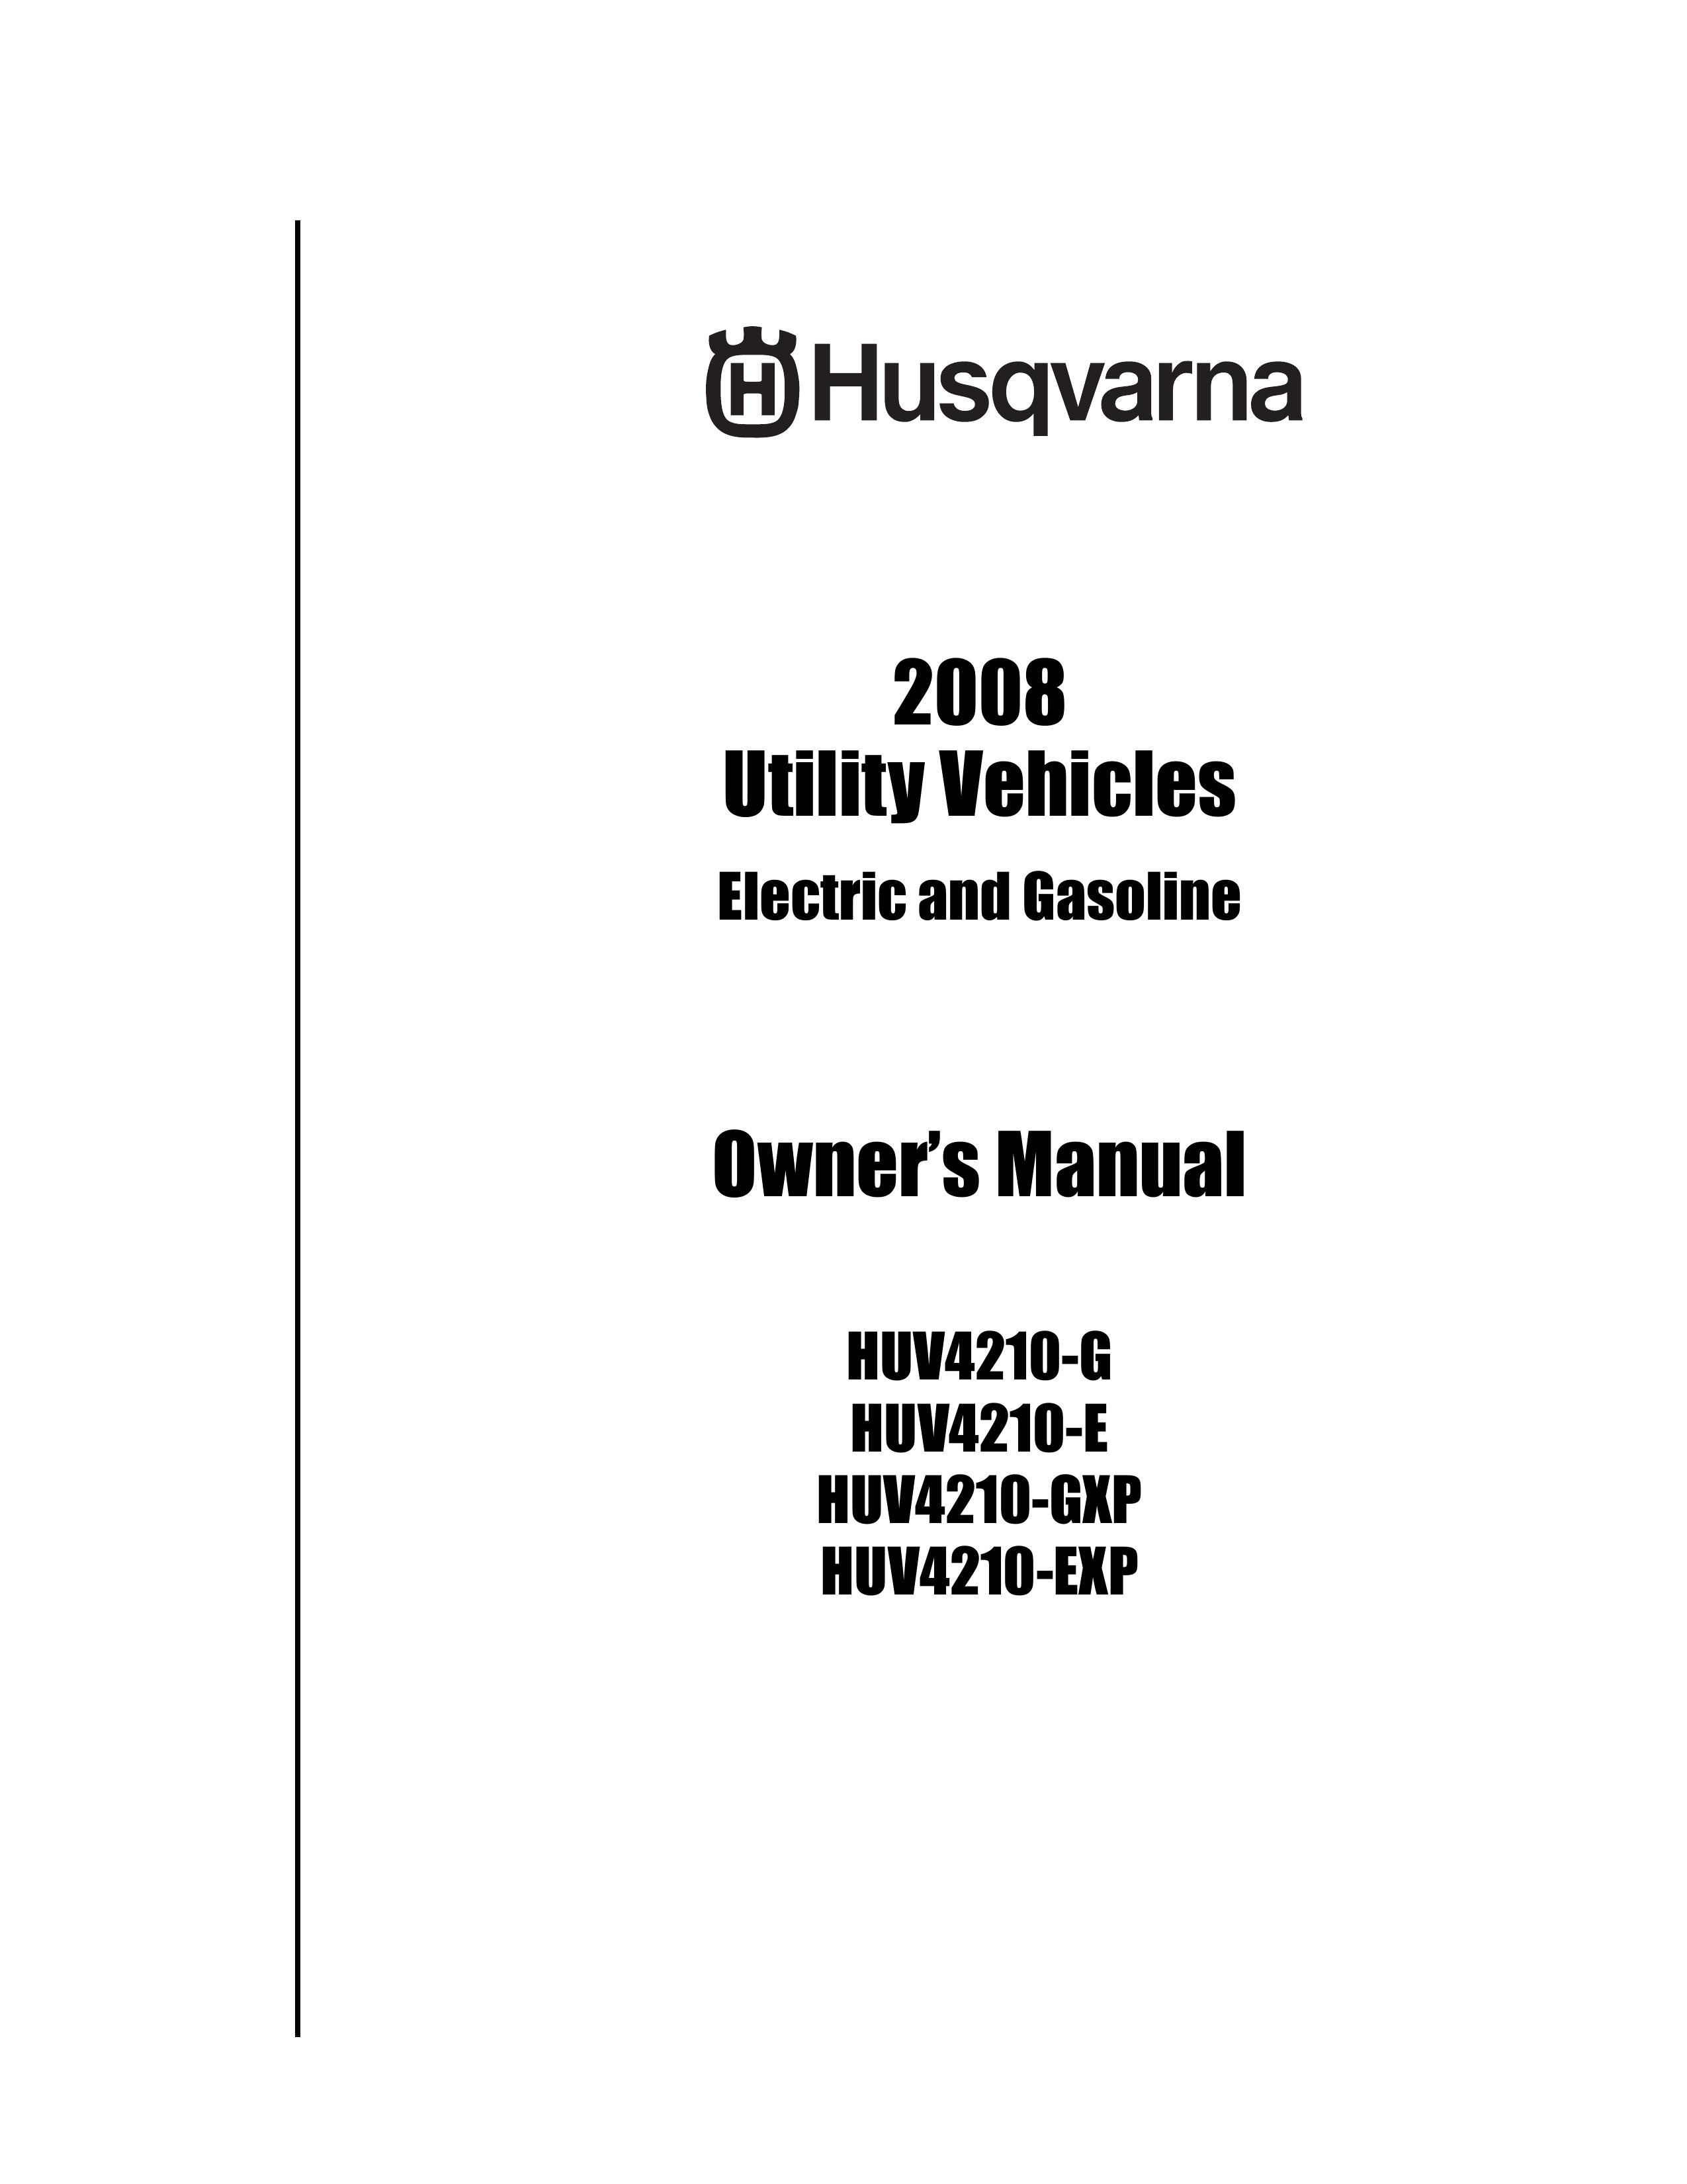 Husqvarna HUV4210-GXP Utility Vehicle User Manual